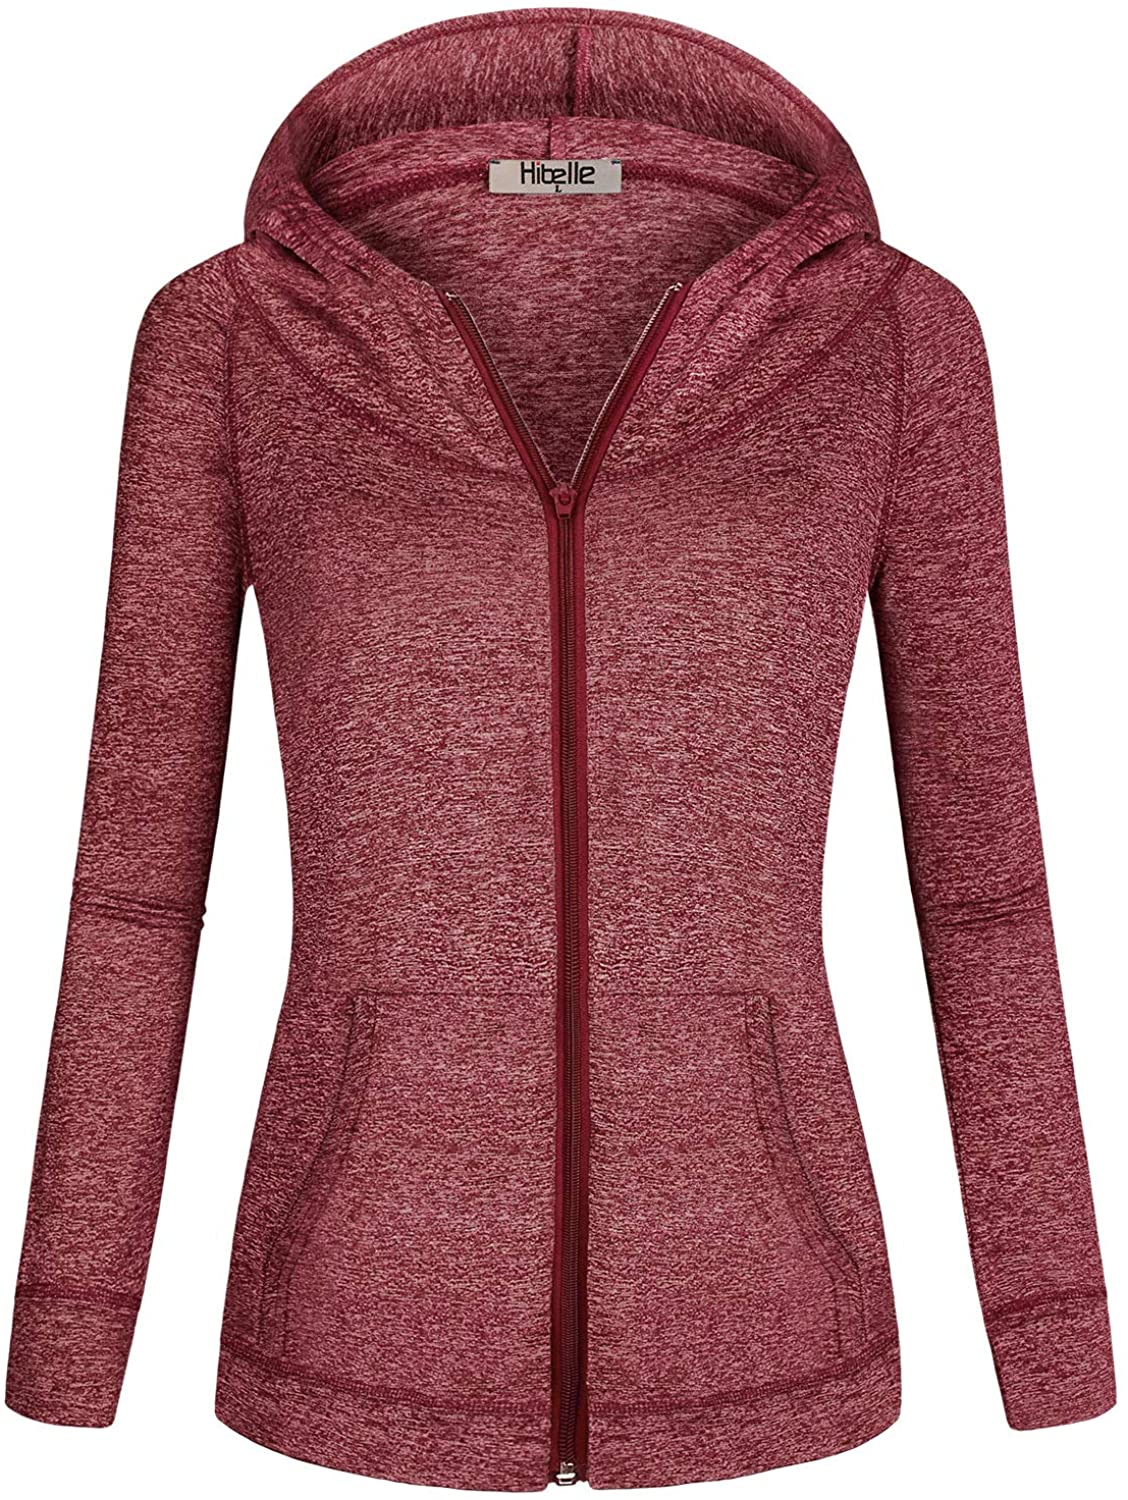 Hibelle Zippered Sweatshirt Without Hood, Full Zipper Seamless